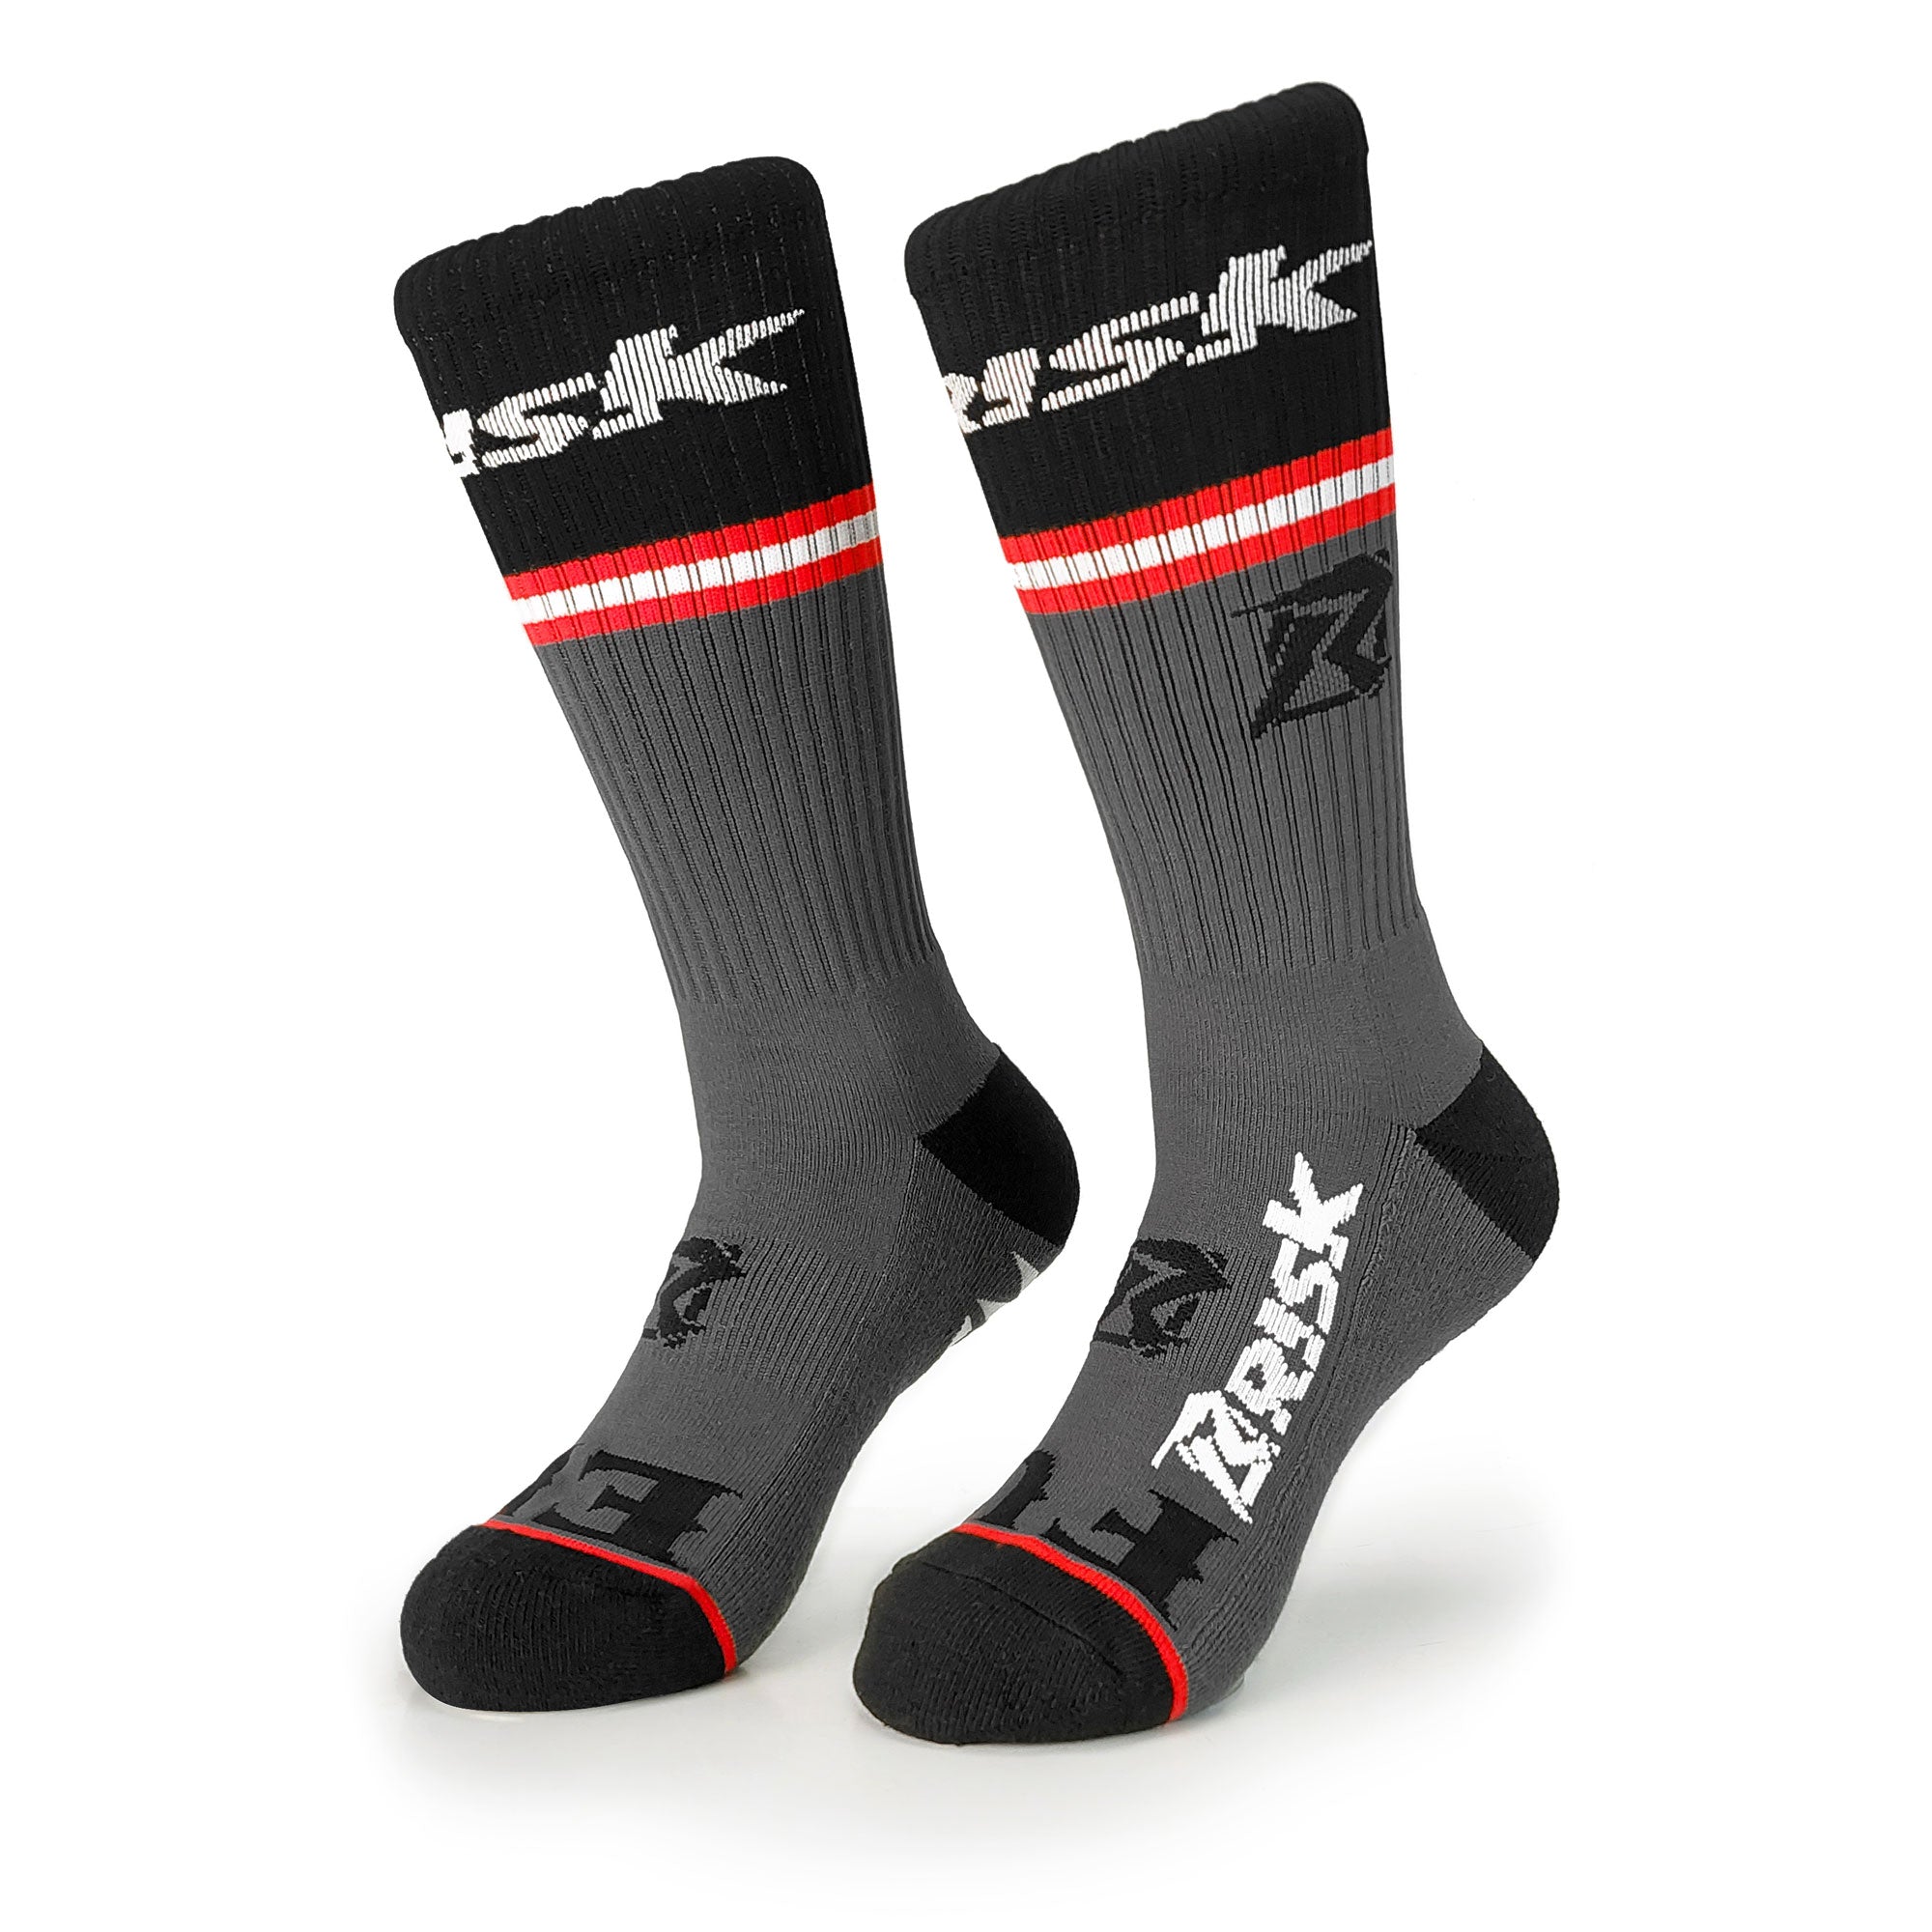 Risk Racing - Break Bones - Motocross Inspired Socks - Partnership with FUEL Apparel - Bottom View